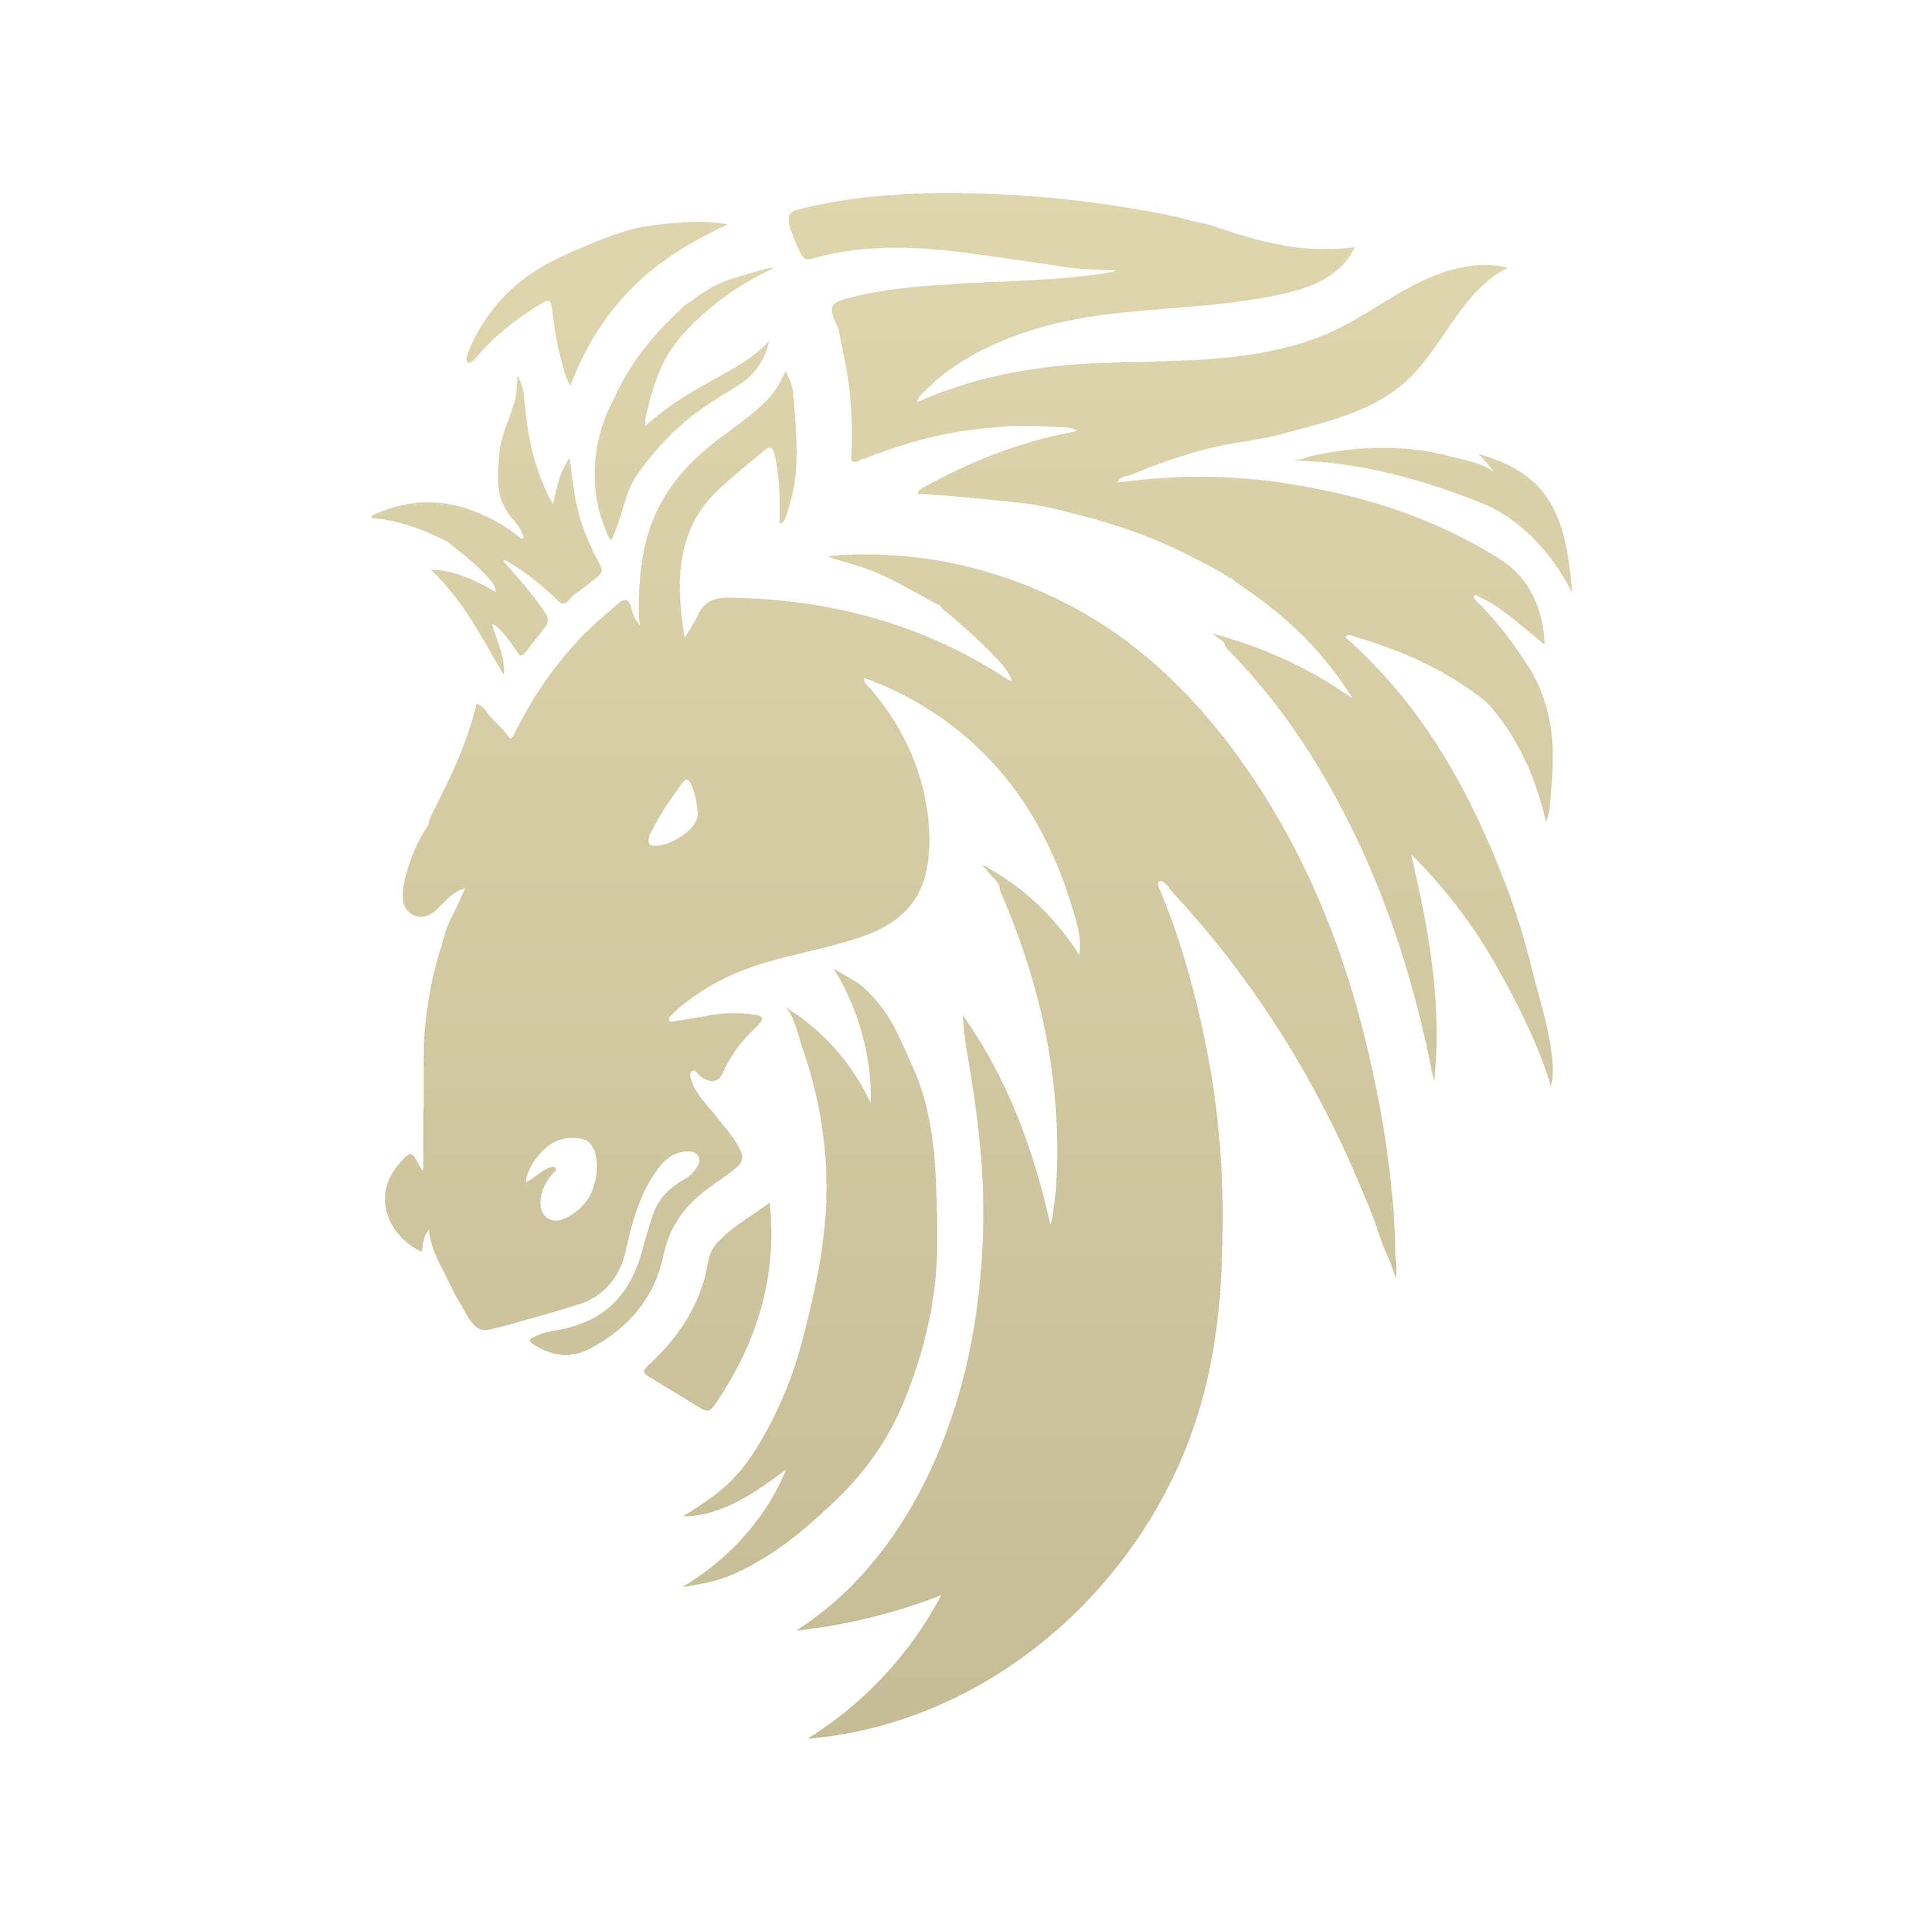 steed logo (2)1